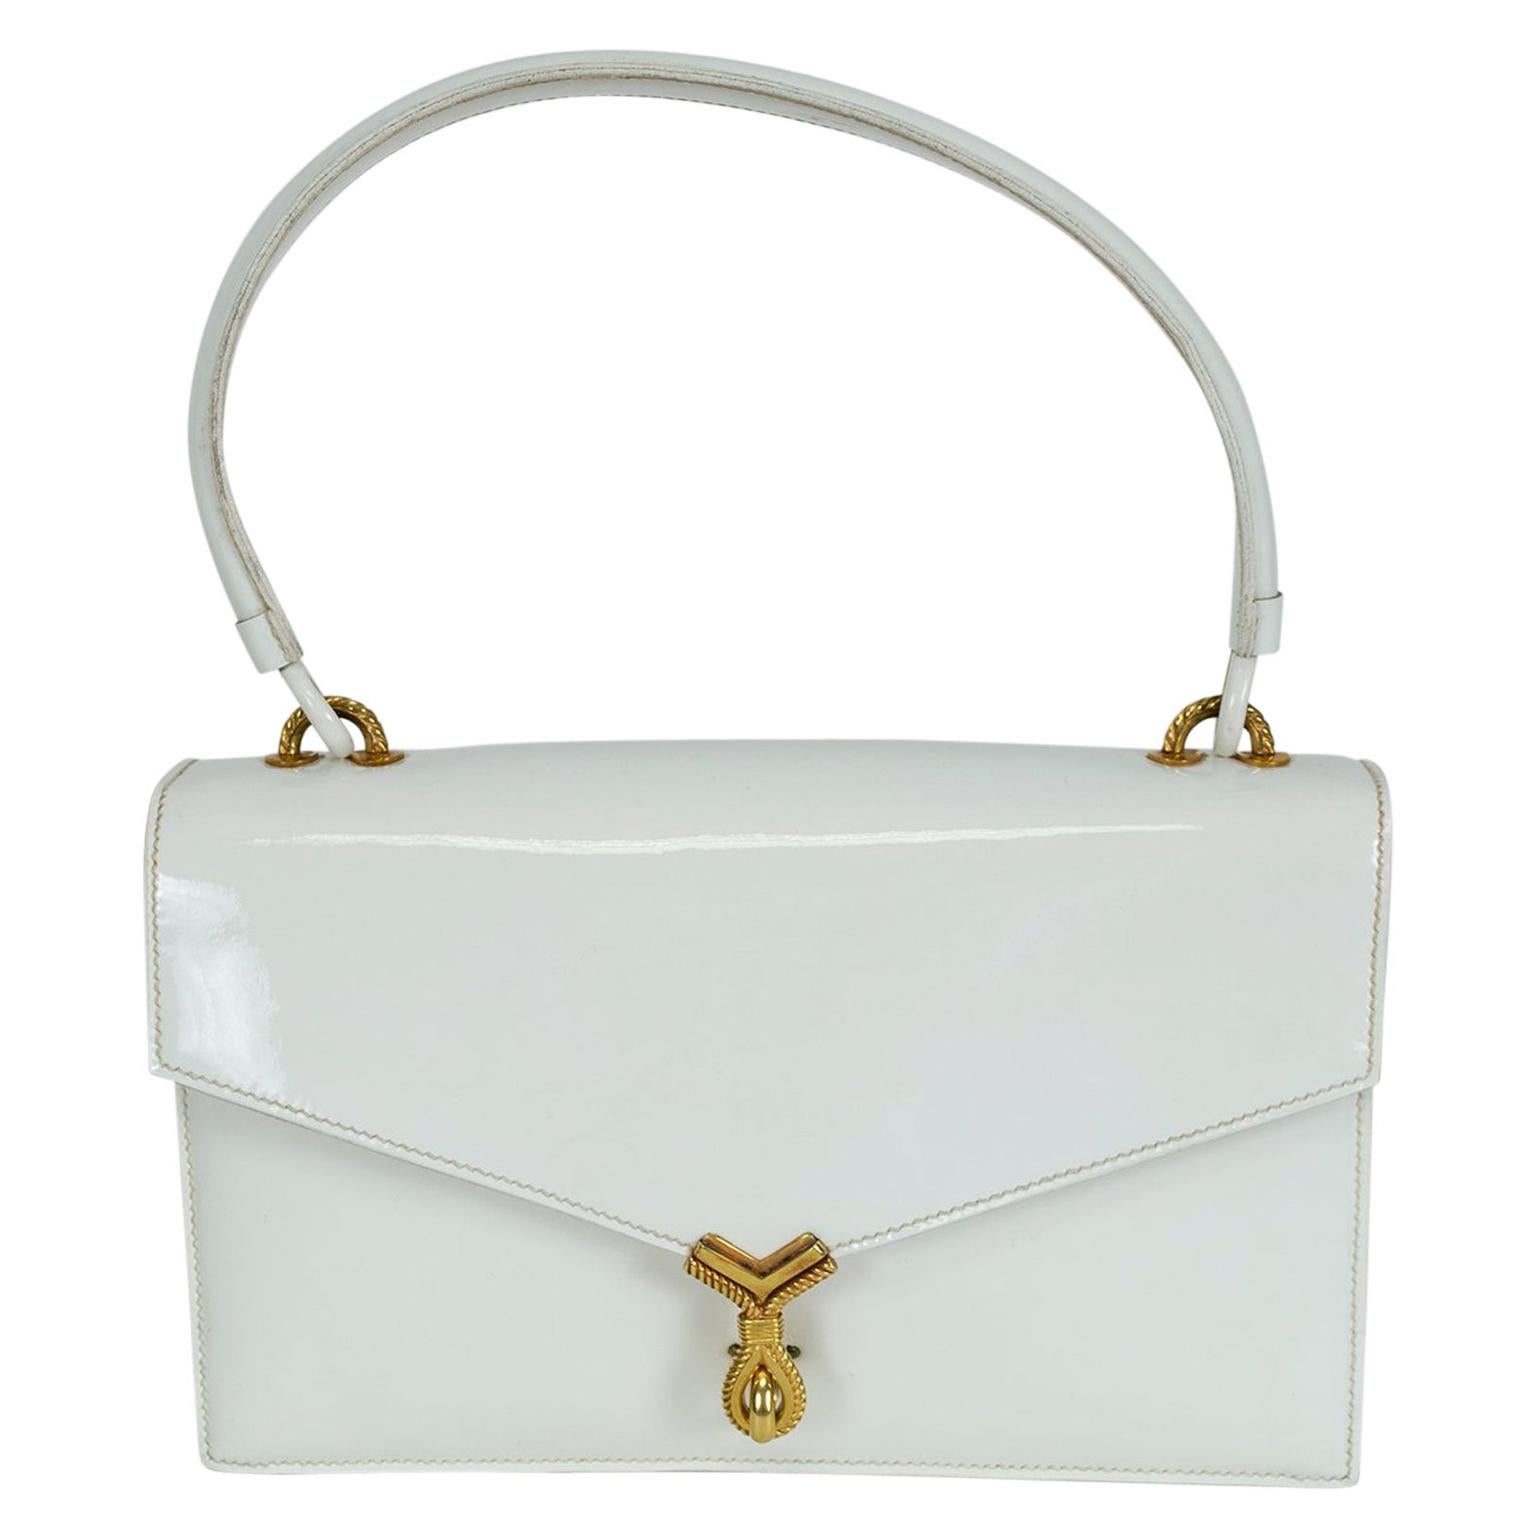 Vintage Hermès Sac Cordelière White Patent Leather Envelope Handbag- 25 cm, 1951 For Sale